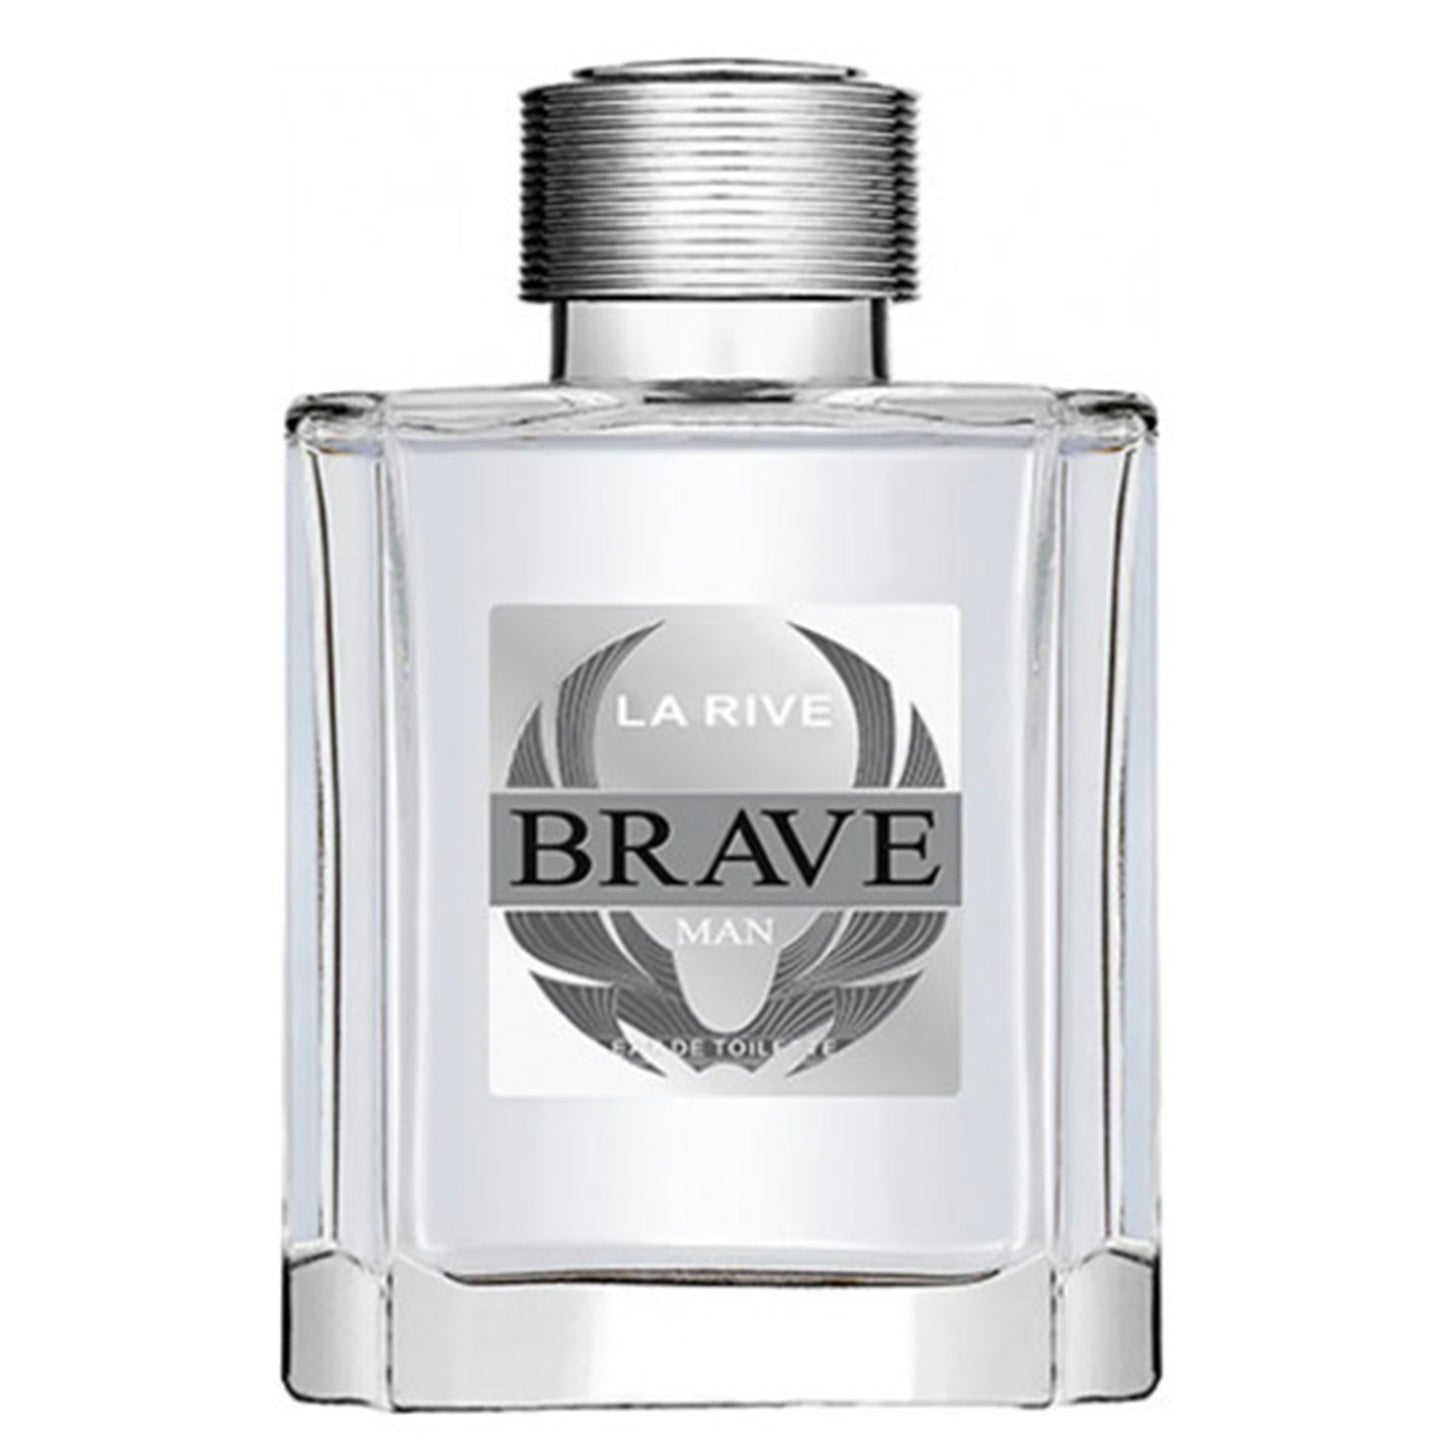 LA RIVE BRAVE MAN EAU DE TOILETTE 100ML - woody aromatic